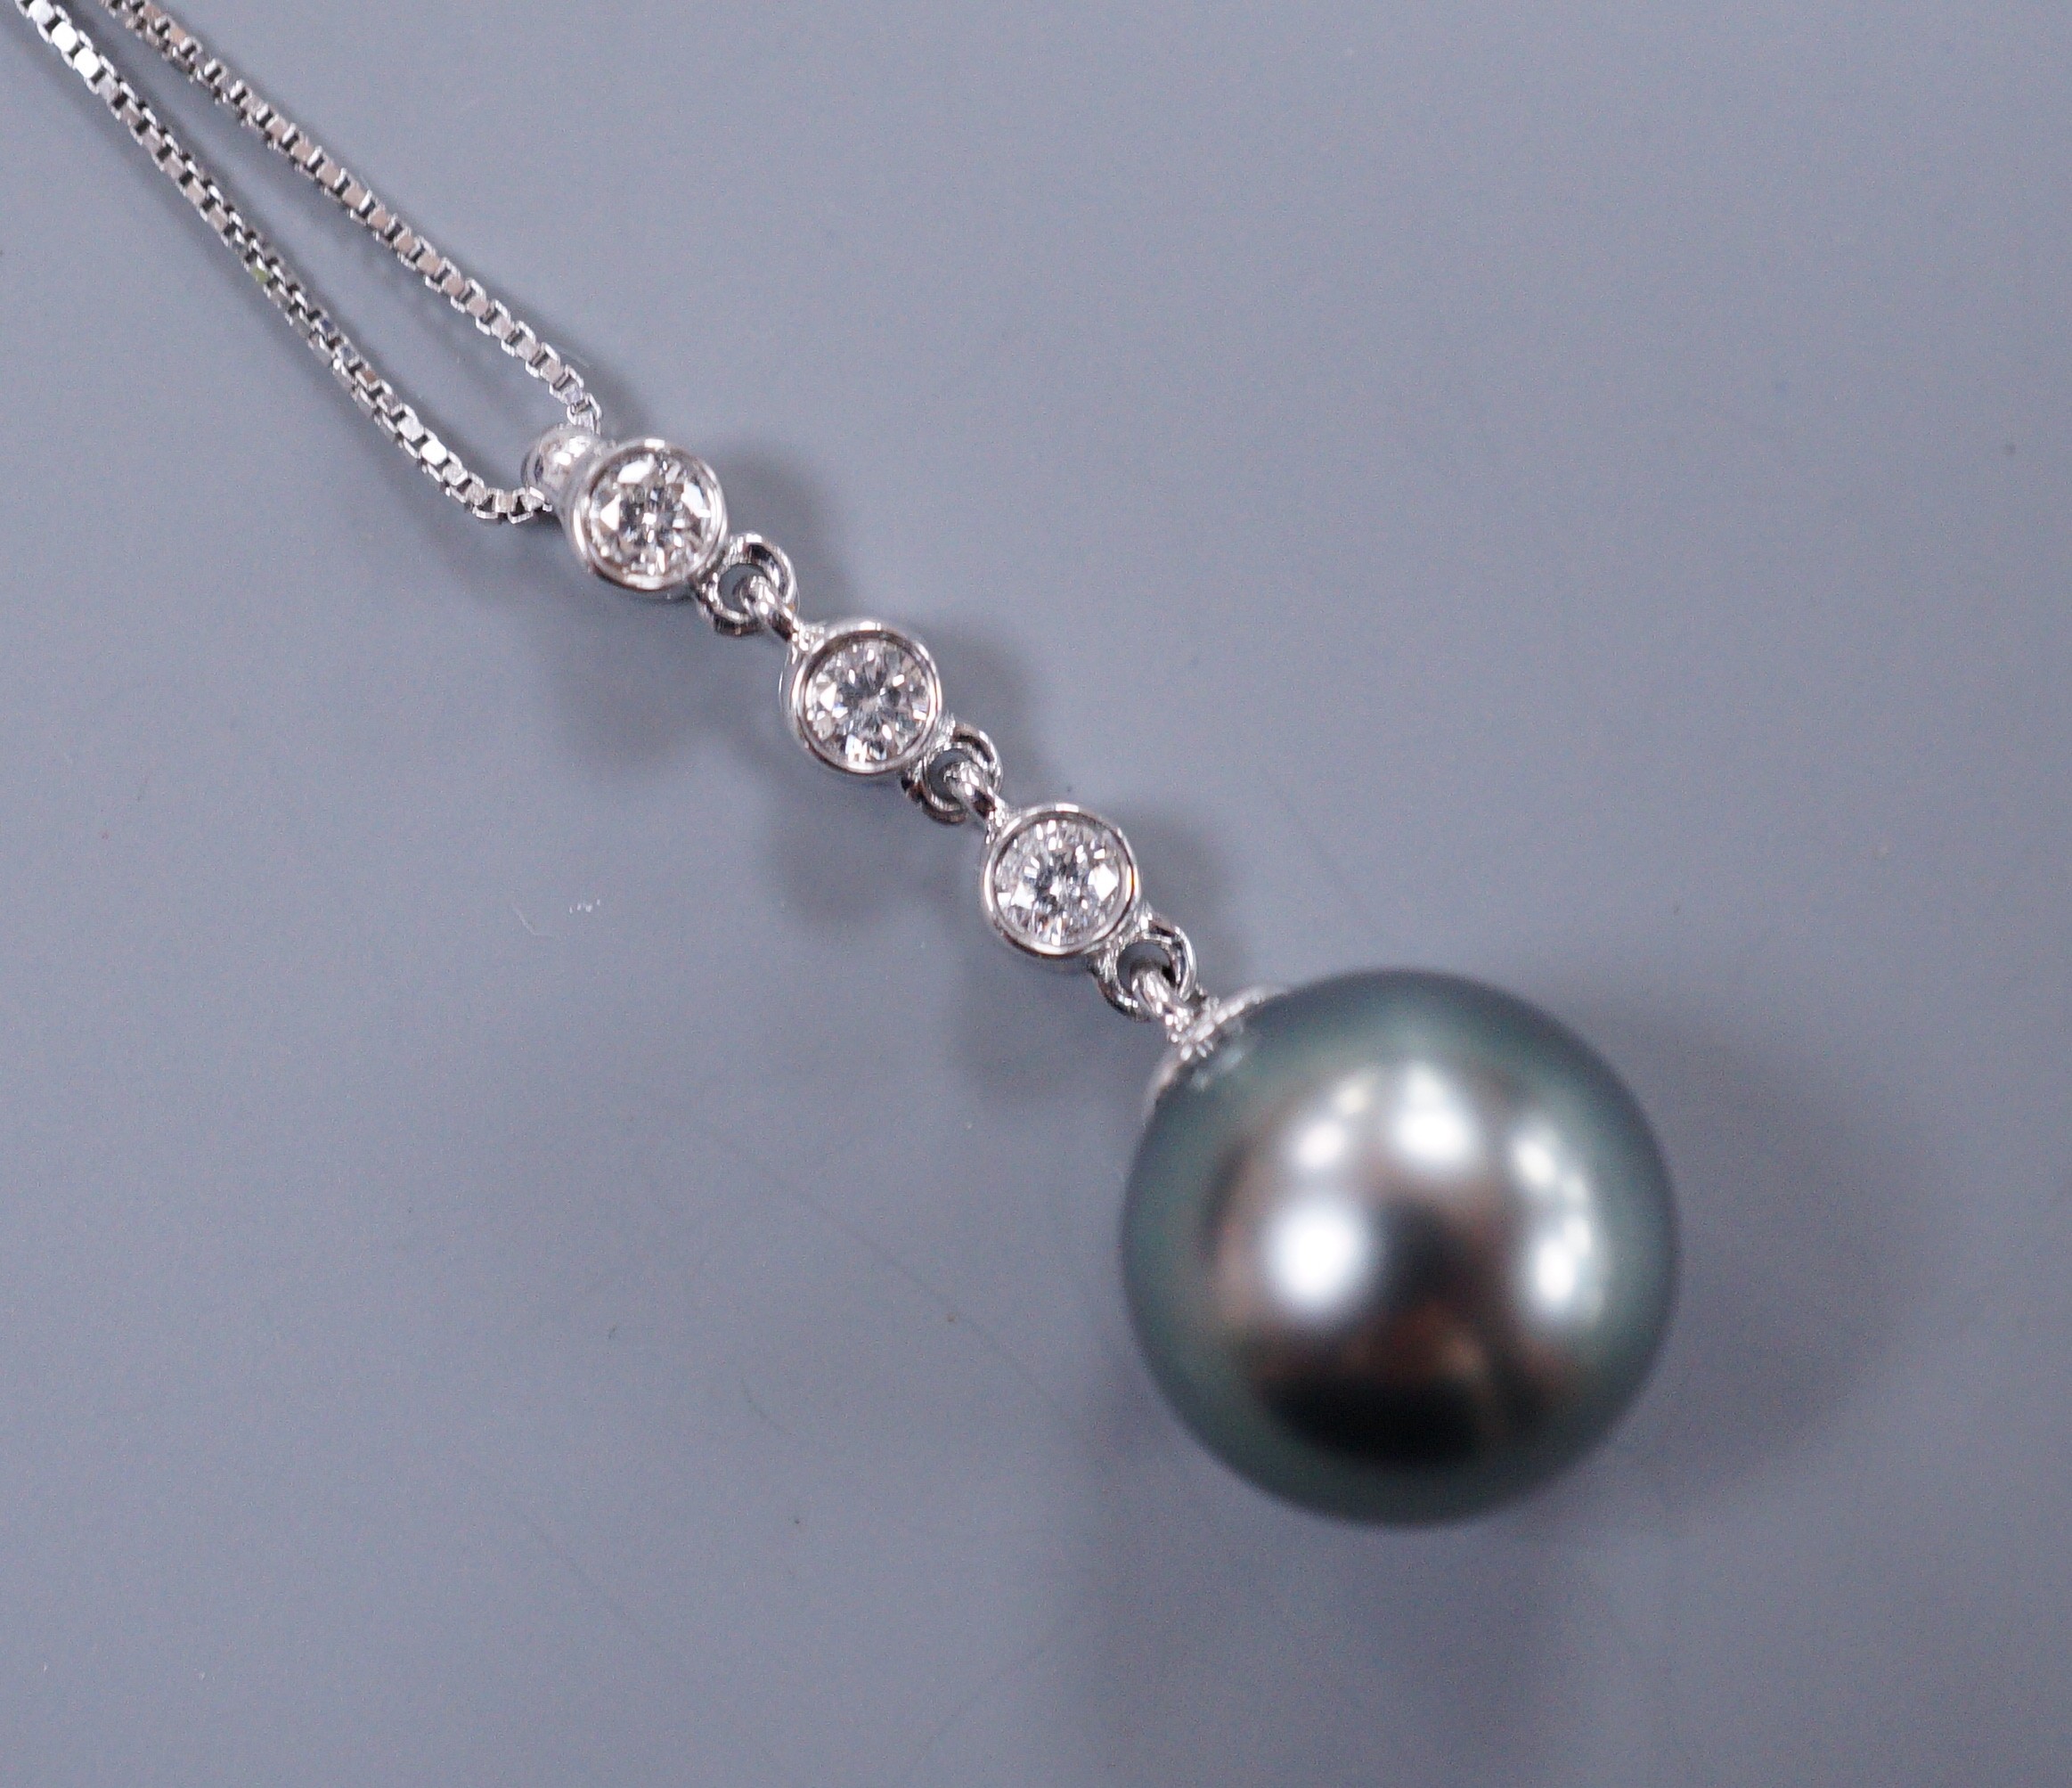 An Iliana 18ct white gold Tahitian pearl and diamond drop pendant, with original guarantee card and box